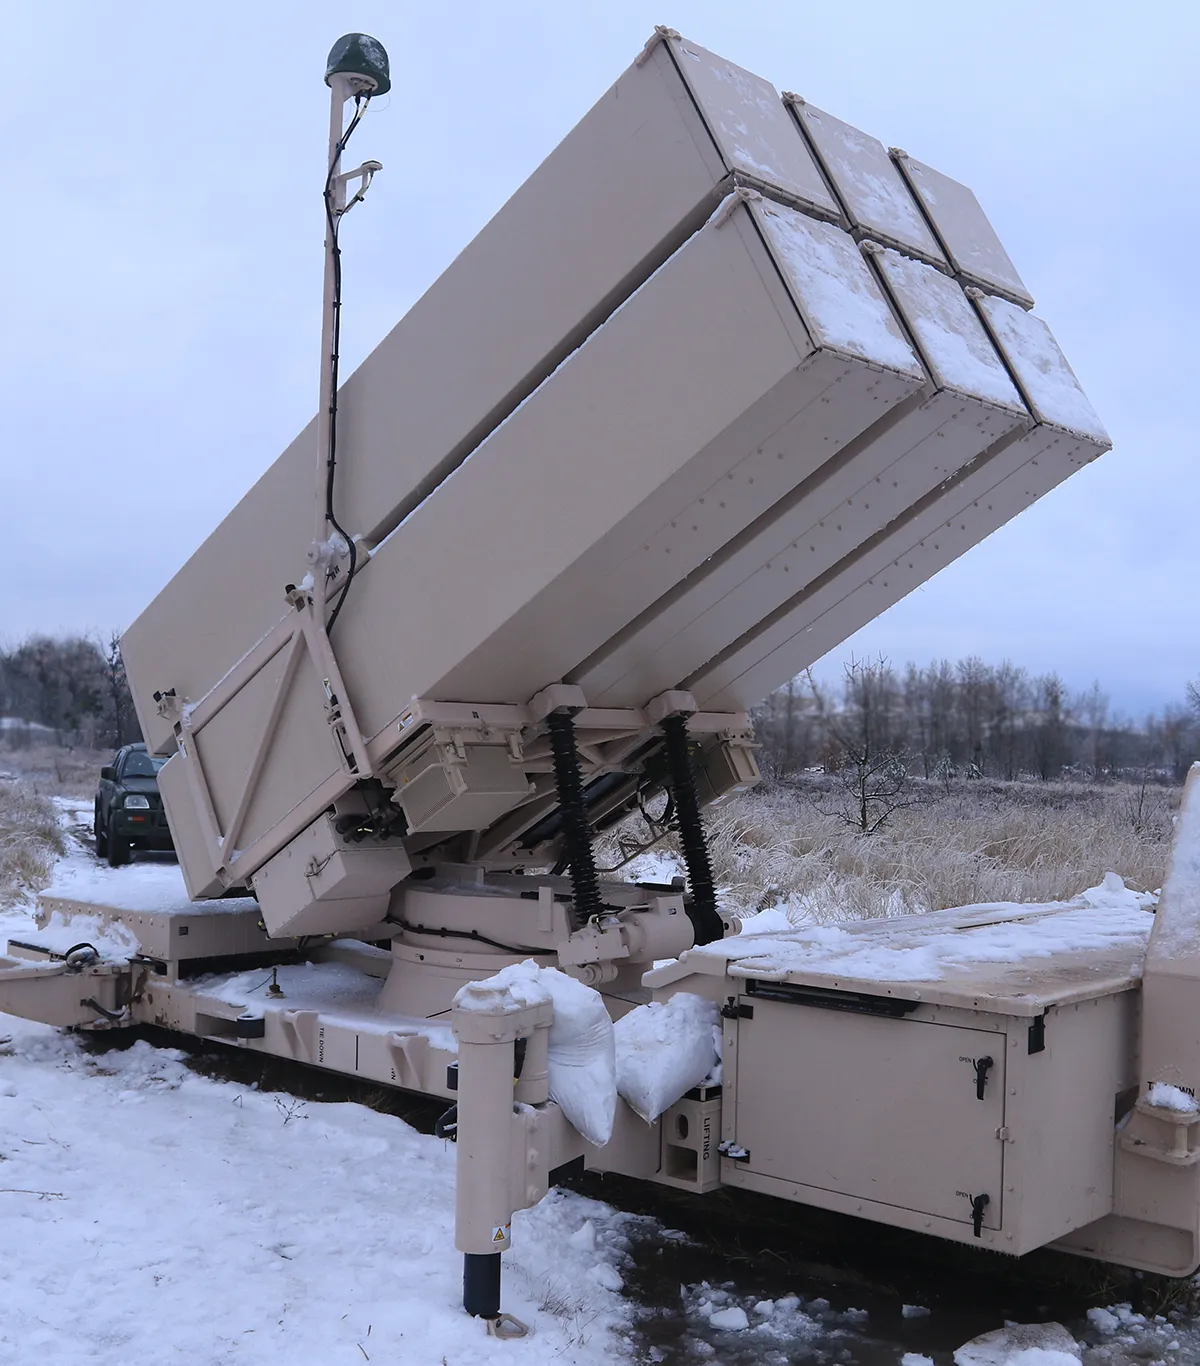 NASAMS launcher on duty somewhere in Ukraine